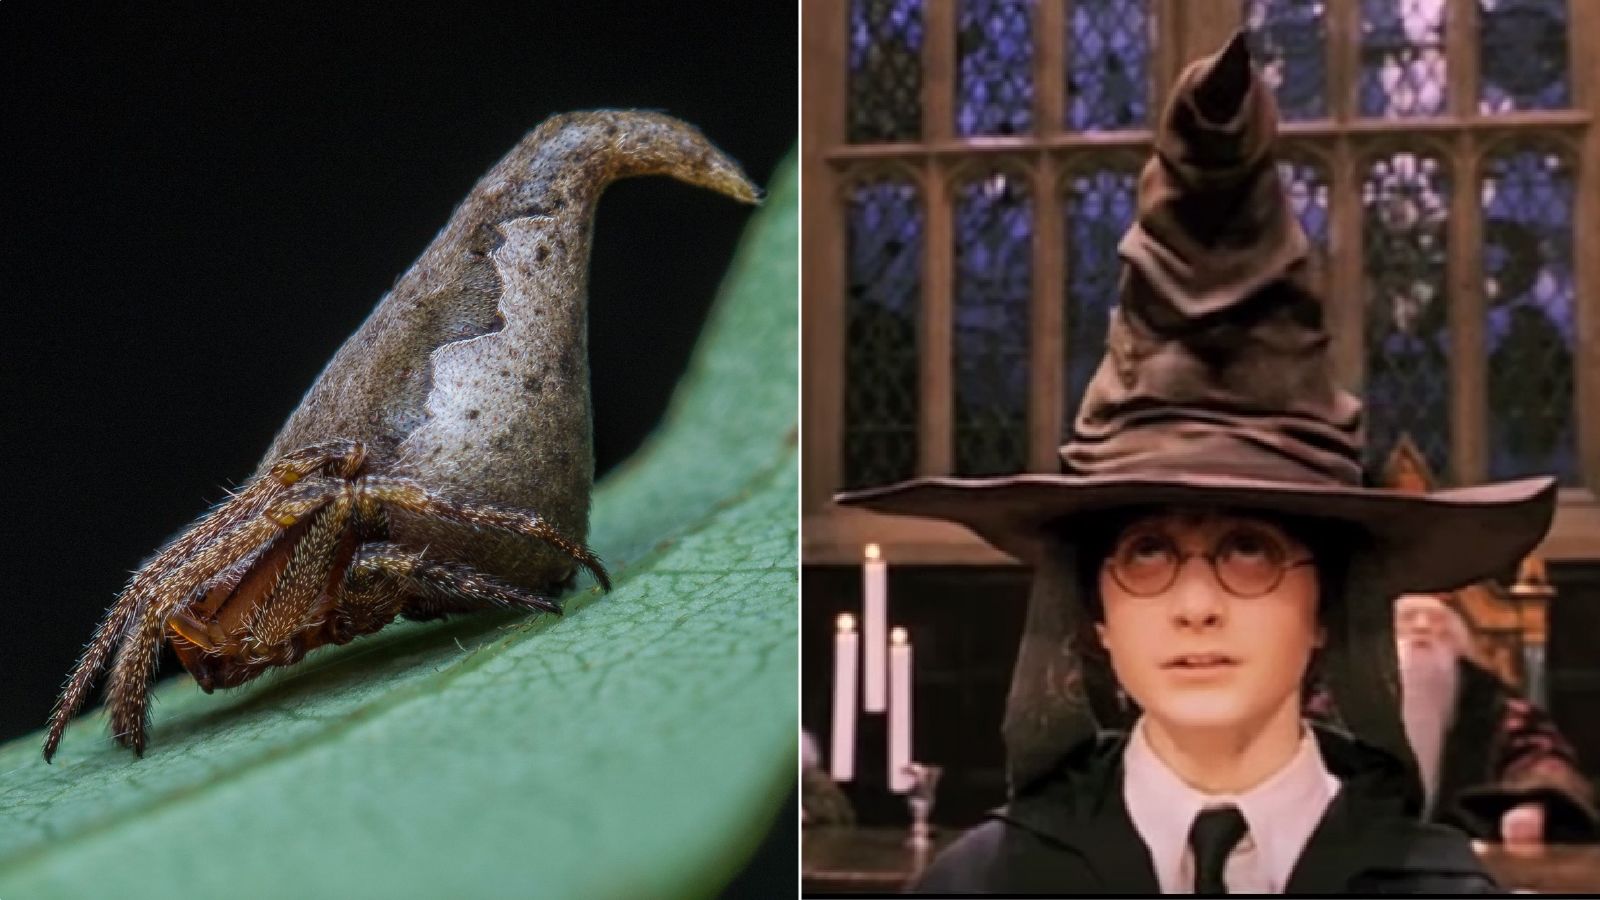 New spider species named after 'Harry Potter' sorting hat